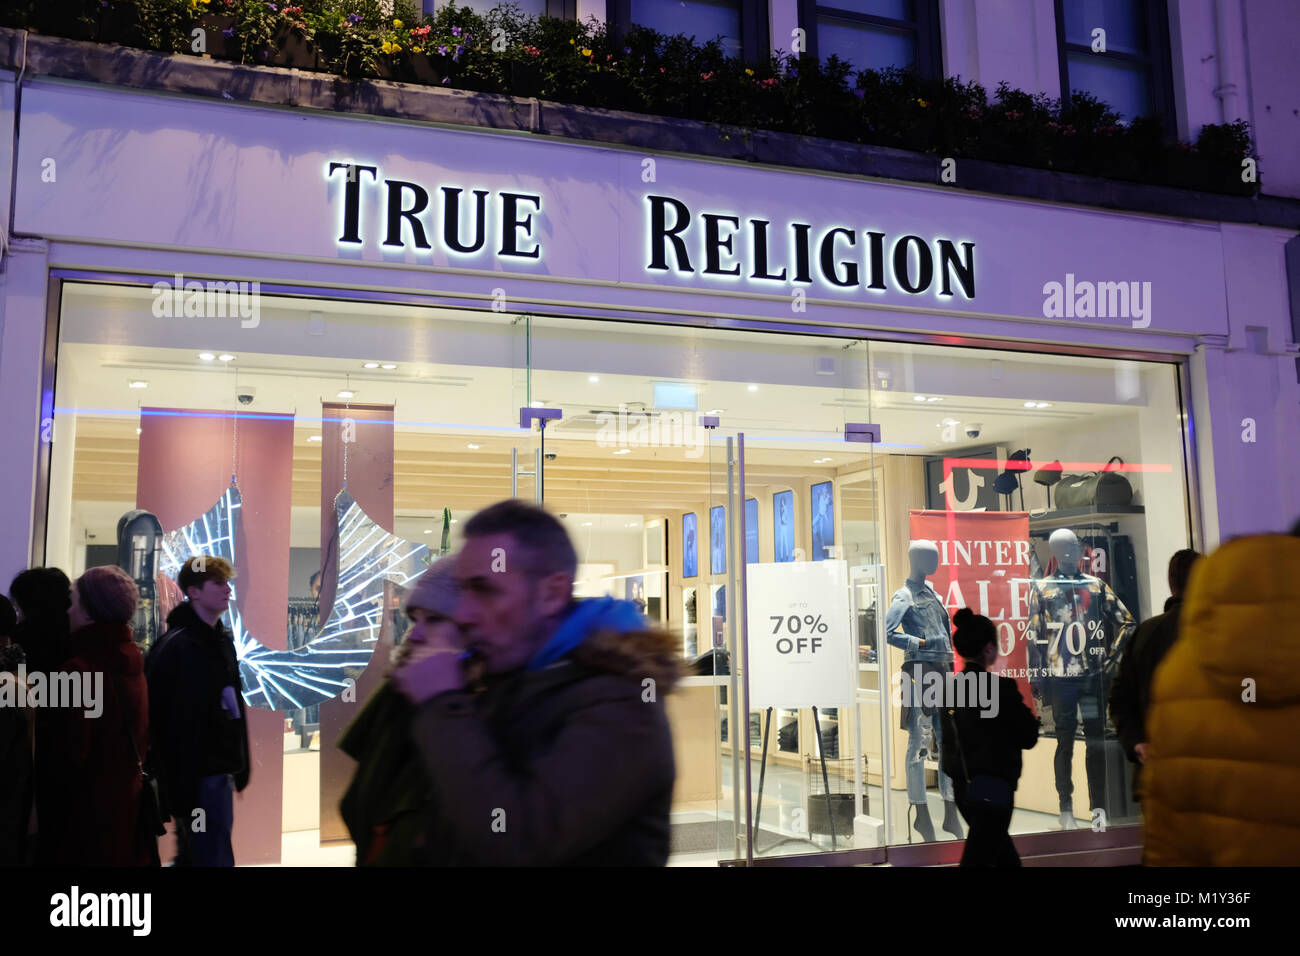 True Religion Store High Resolution 